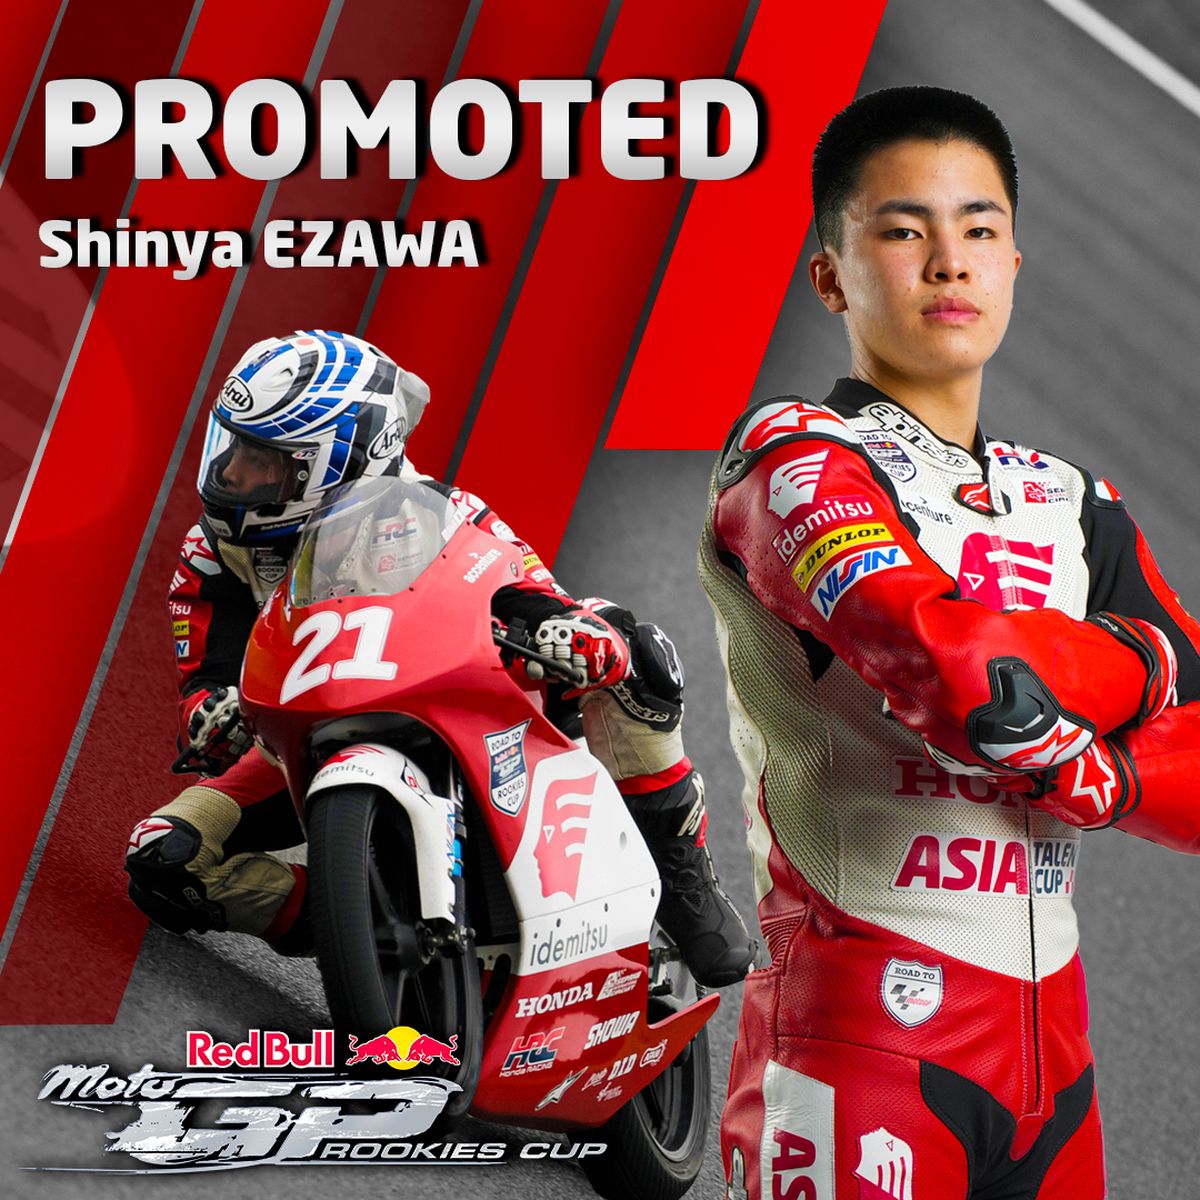 News, Shinya Ezawa will race in the Red Bull MotoGP Rookies Cup in 2023 GPone